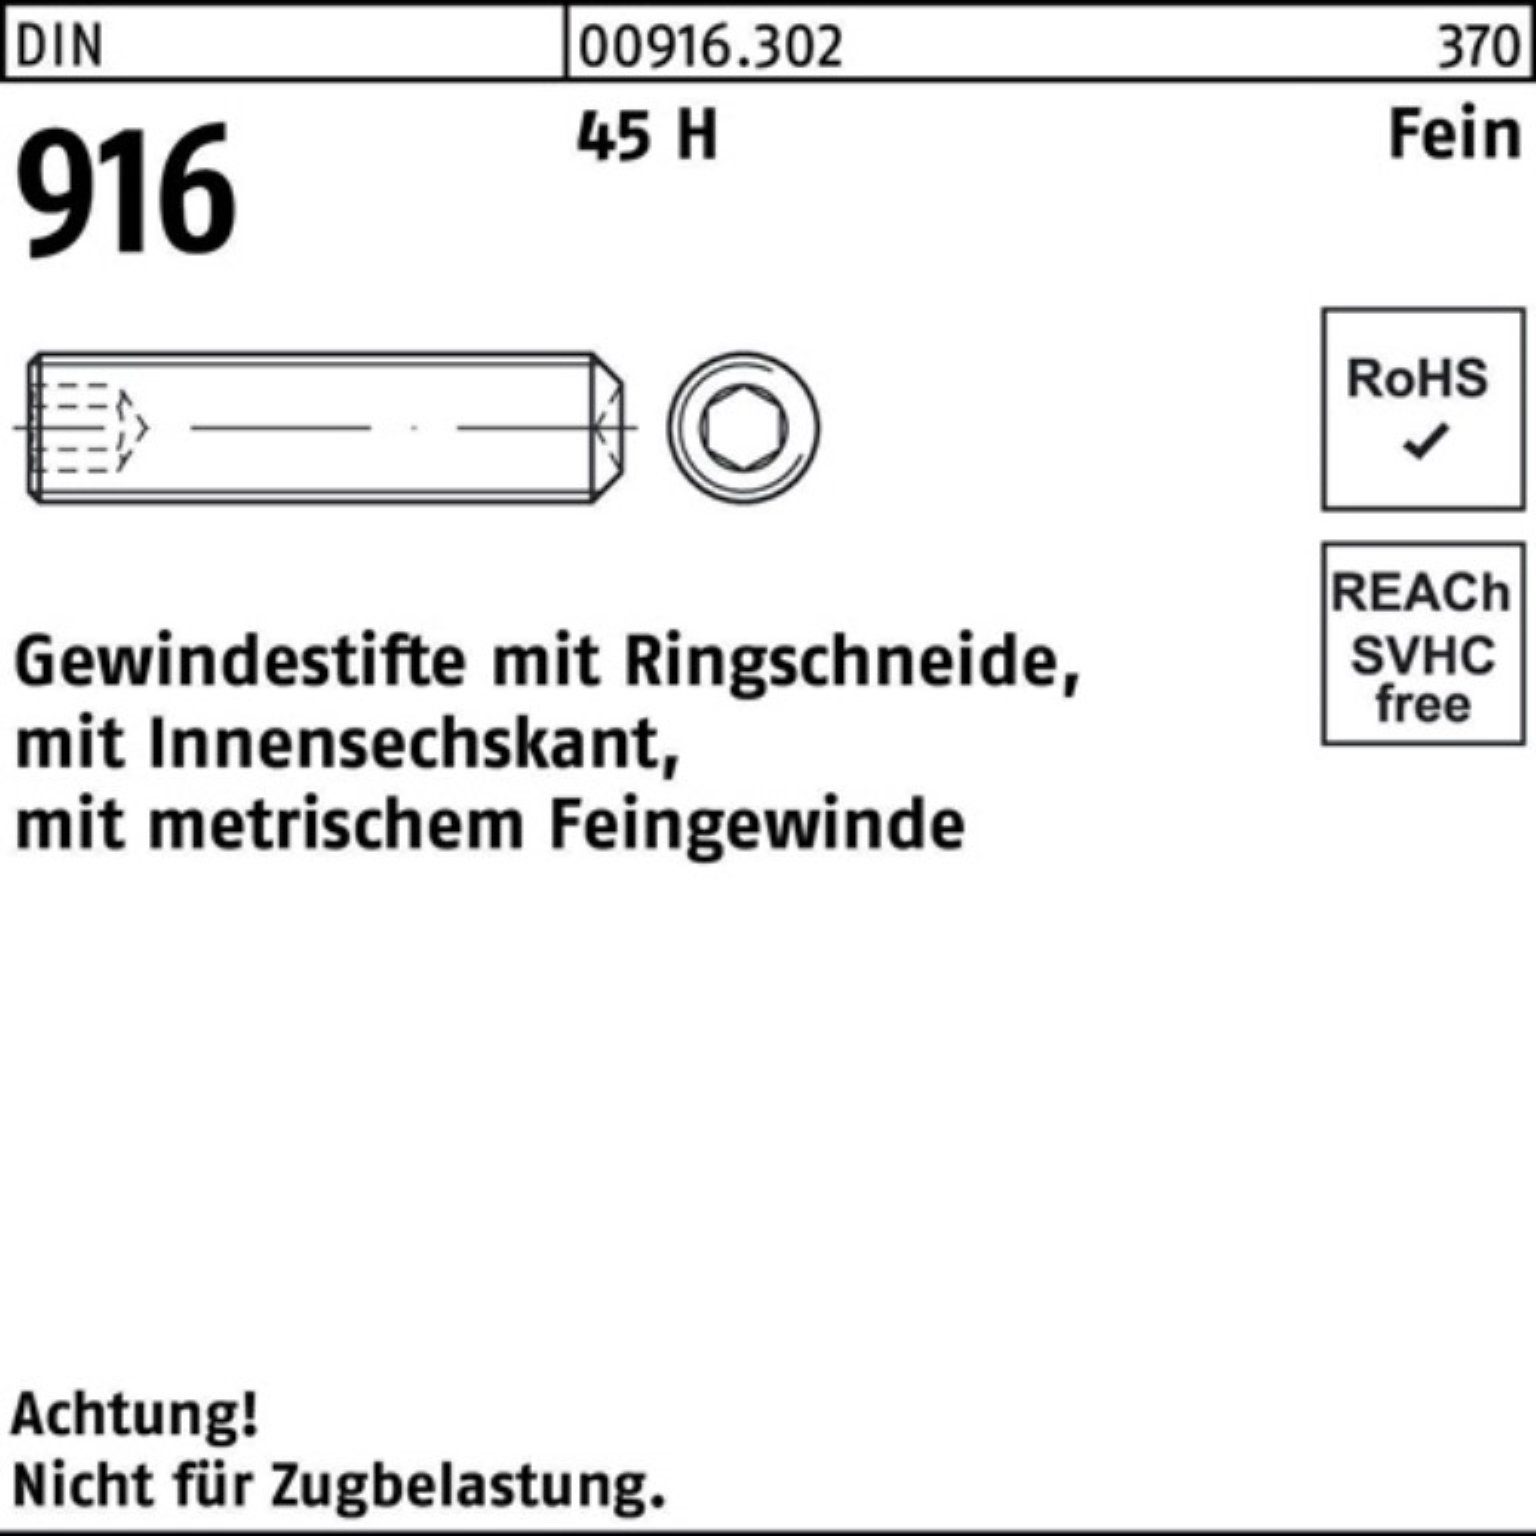 Reyher Gewindebolzen 100er Pack Gewindestift DIN 916 Ringschn./Innen-6kt M8x1x 50 45 H Fein